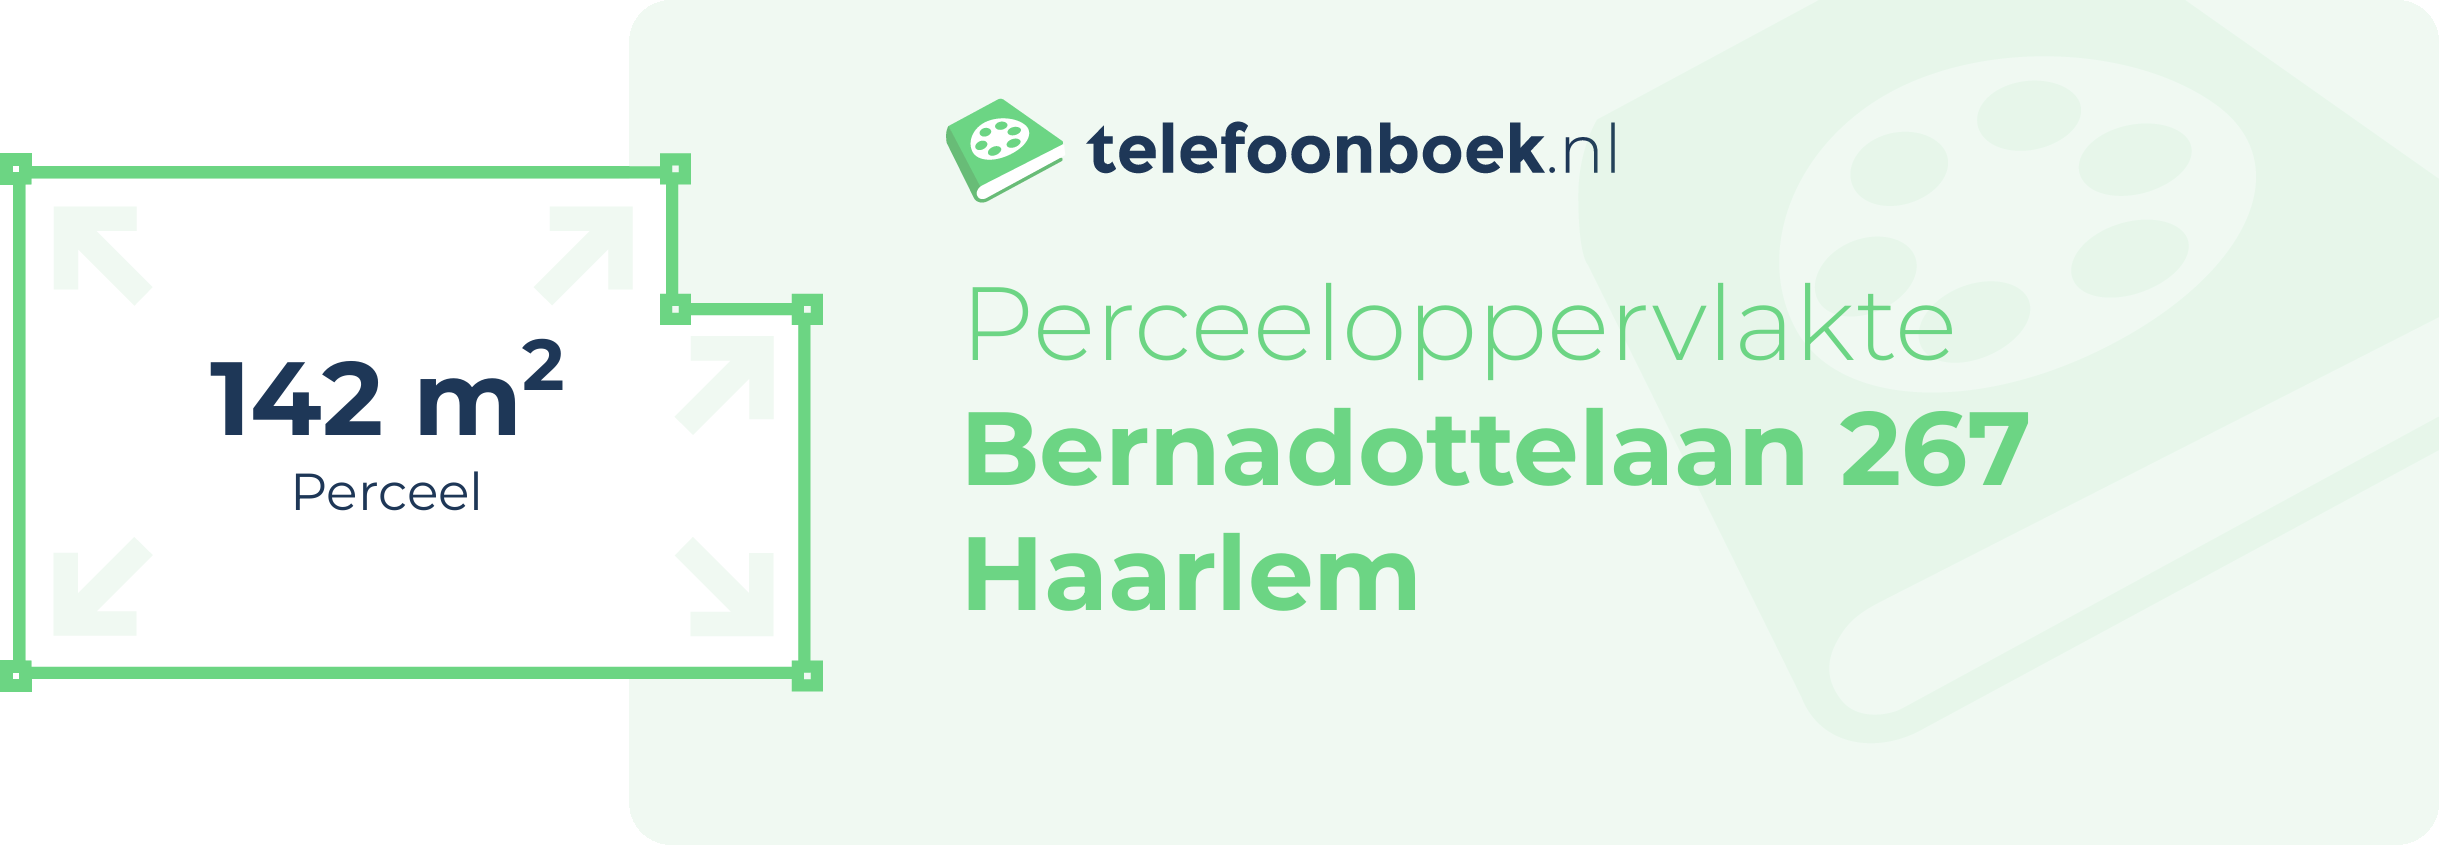 Perceeloppervlakte Bernadottelaan 267 Haarlem